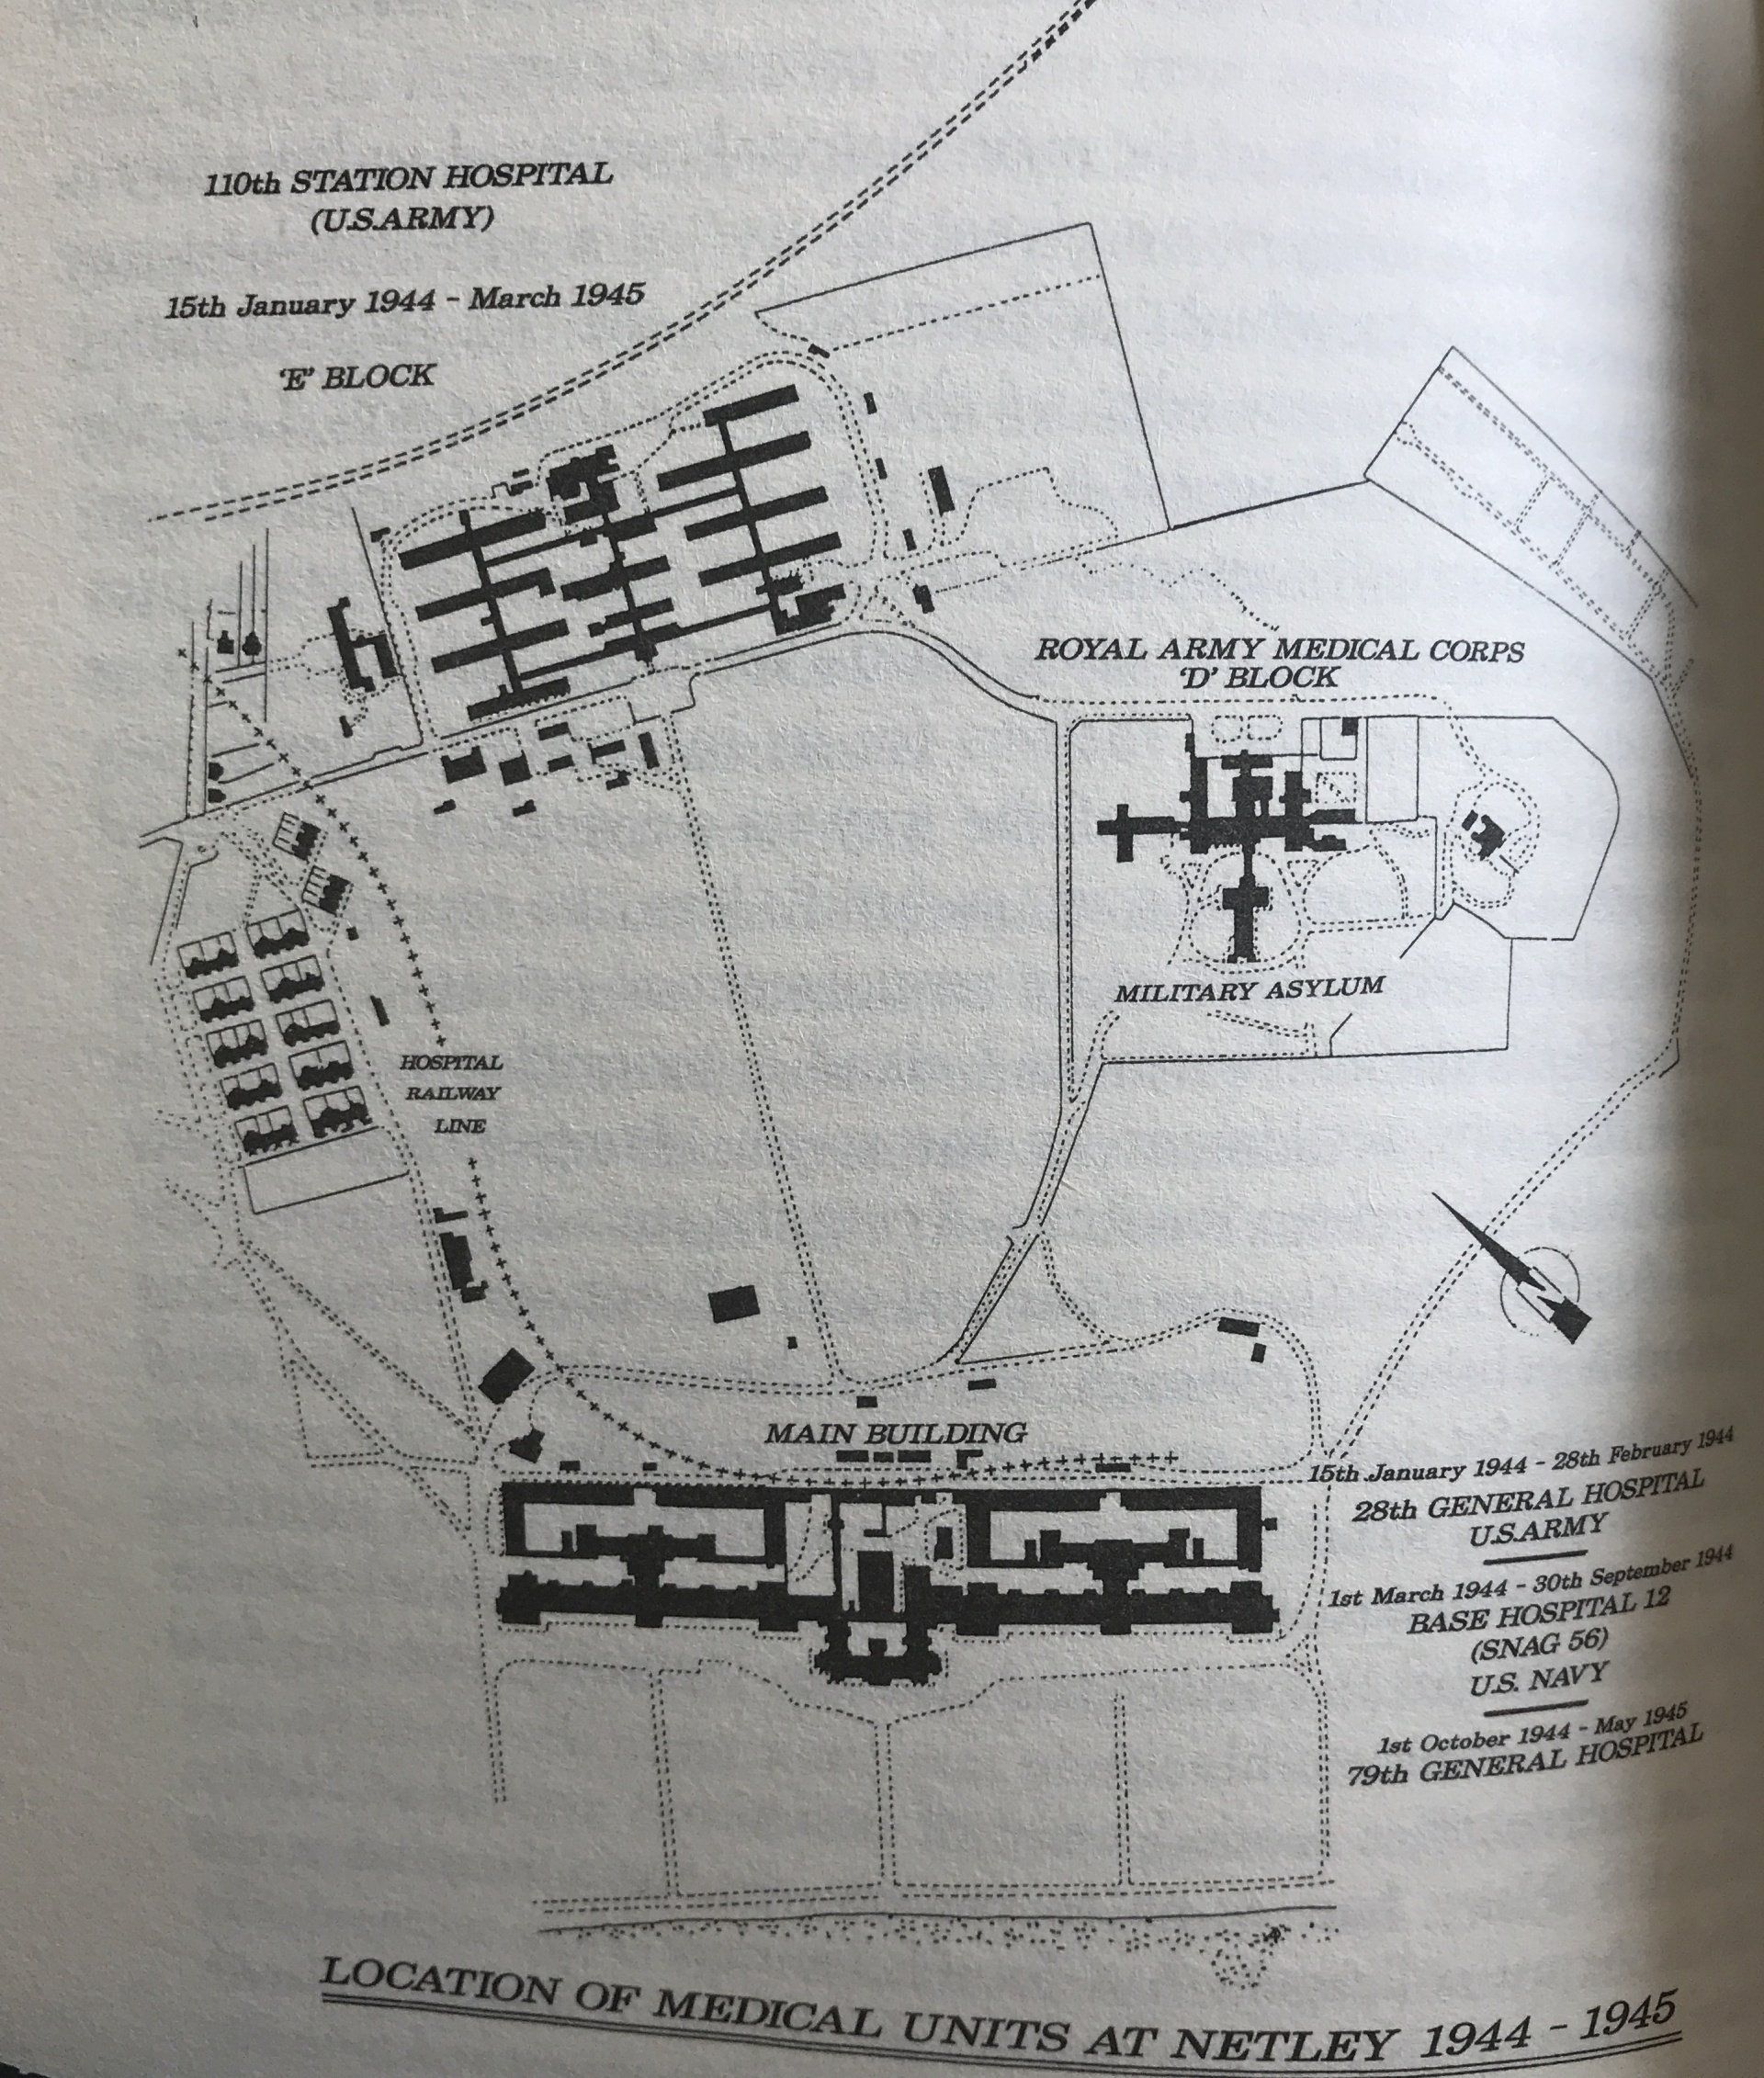 Map of Medical Unit at Netley Hospital 1944 - 1045